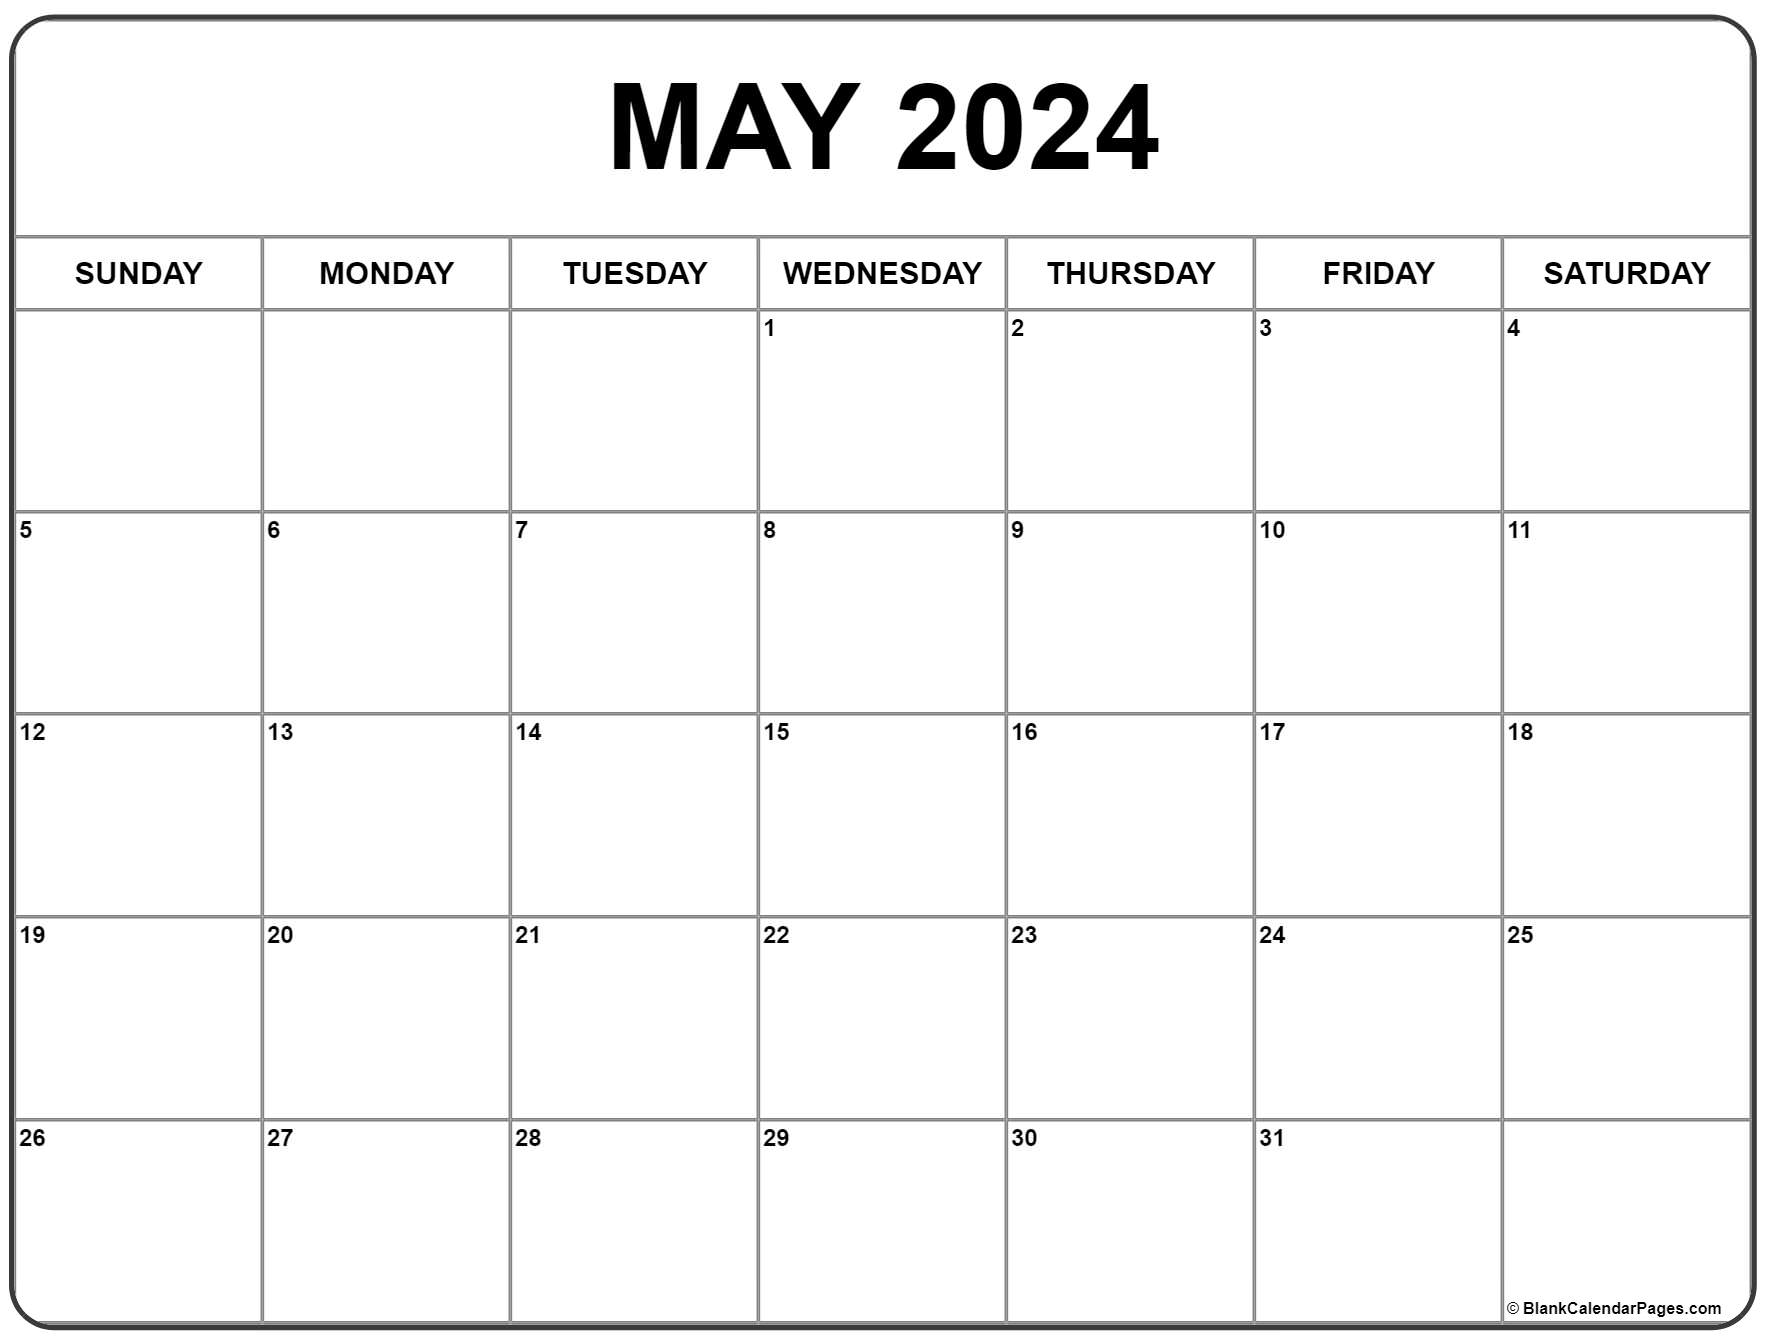 May 2024 Calendar | Free Printable Calendar for Printable May 2024 Calendar With Notes